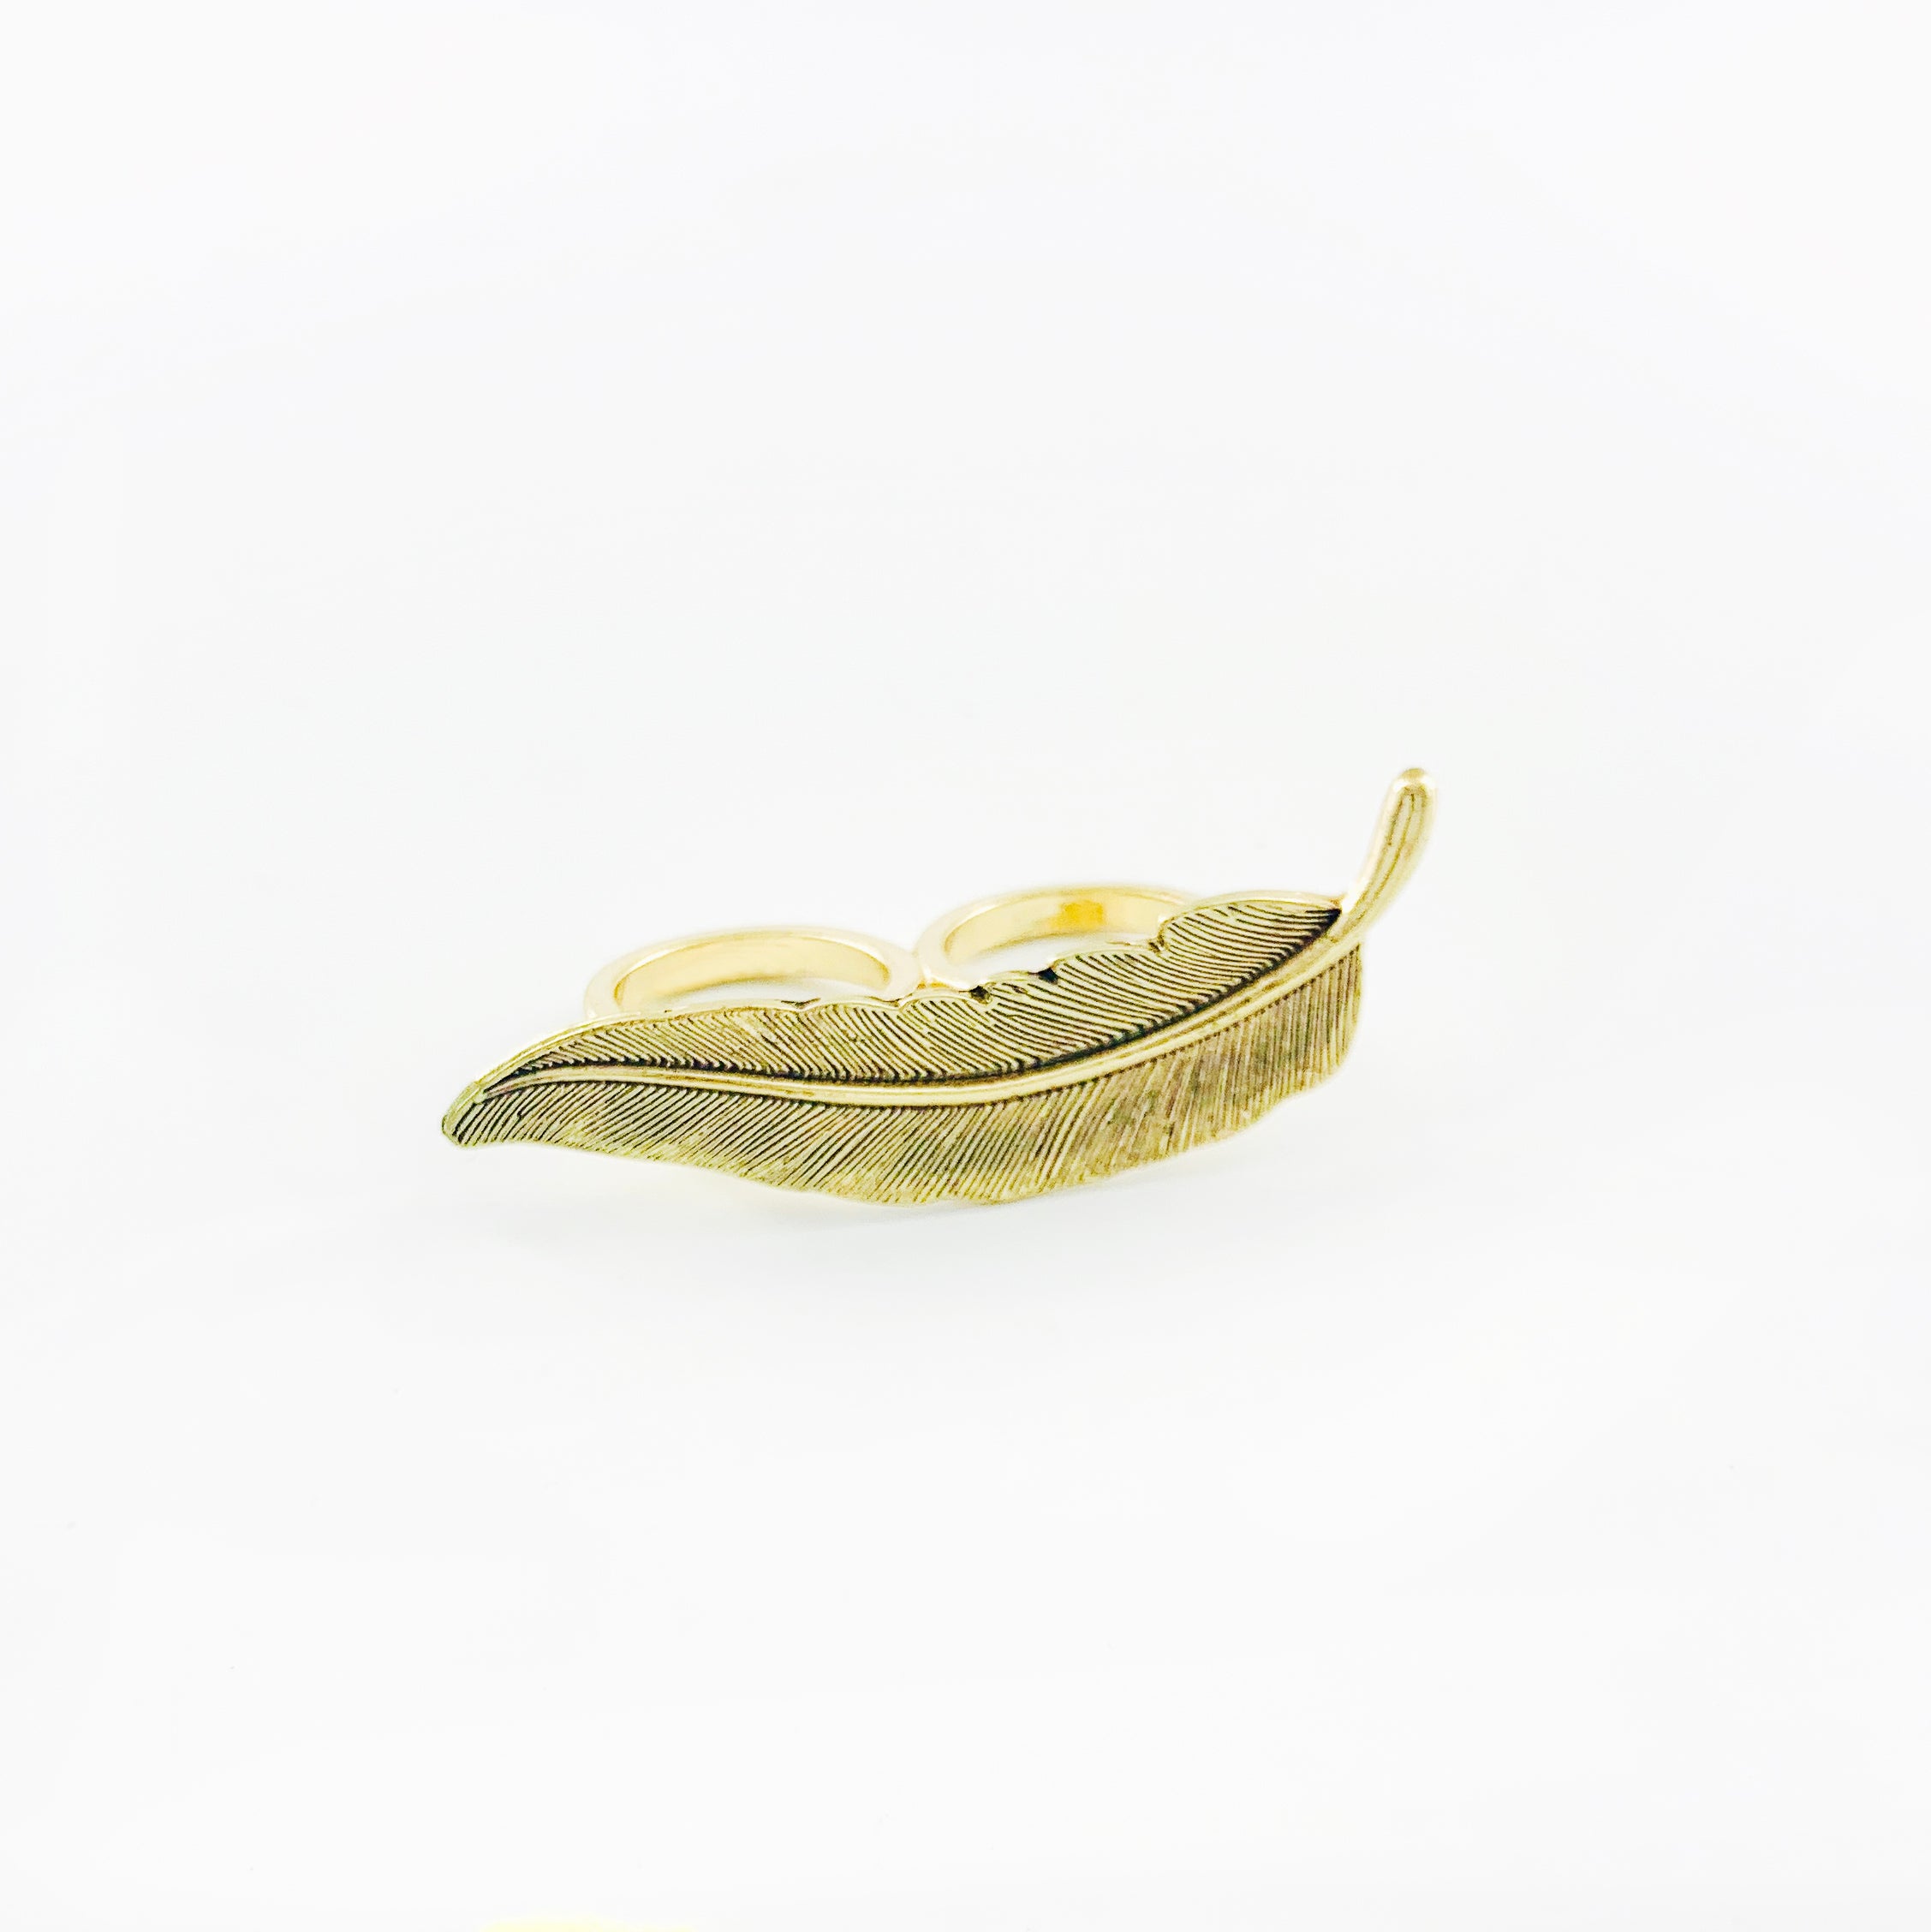 Large gold ring with leaf design